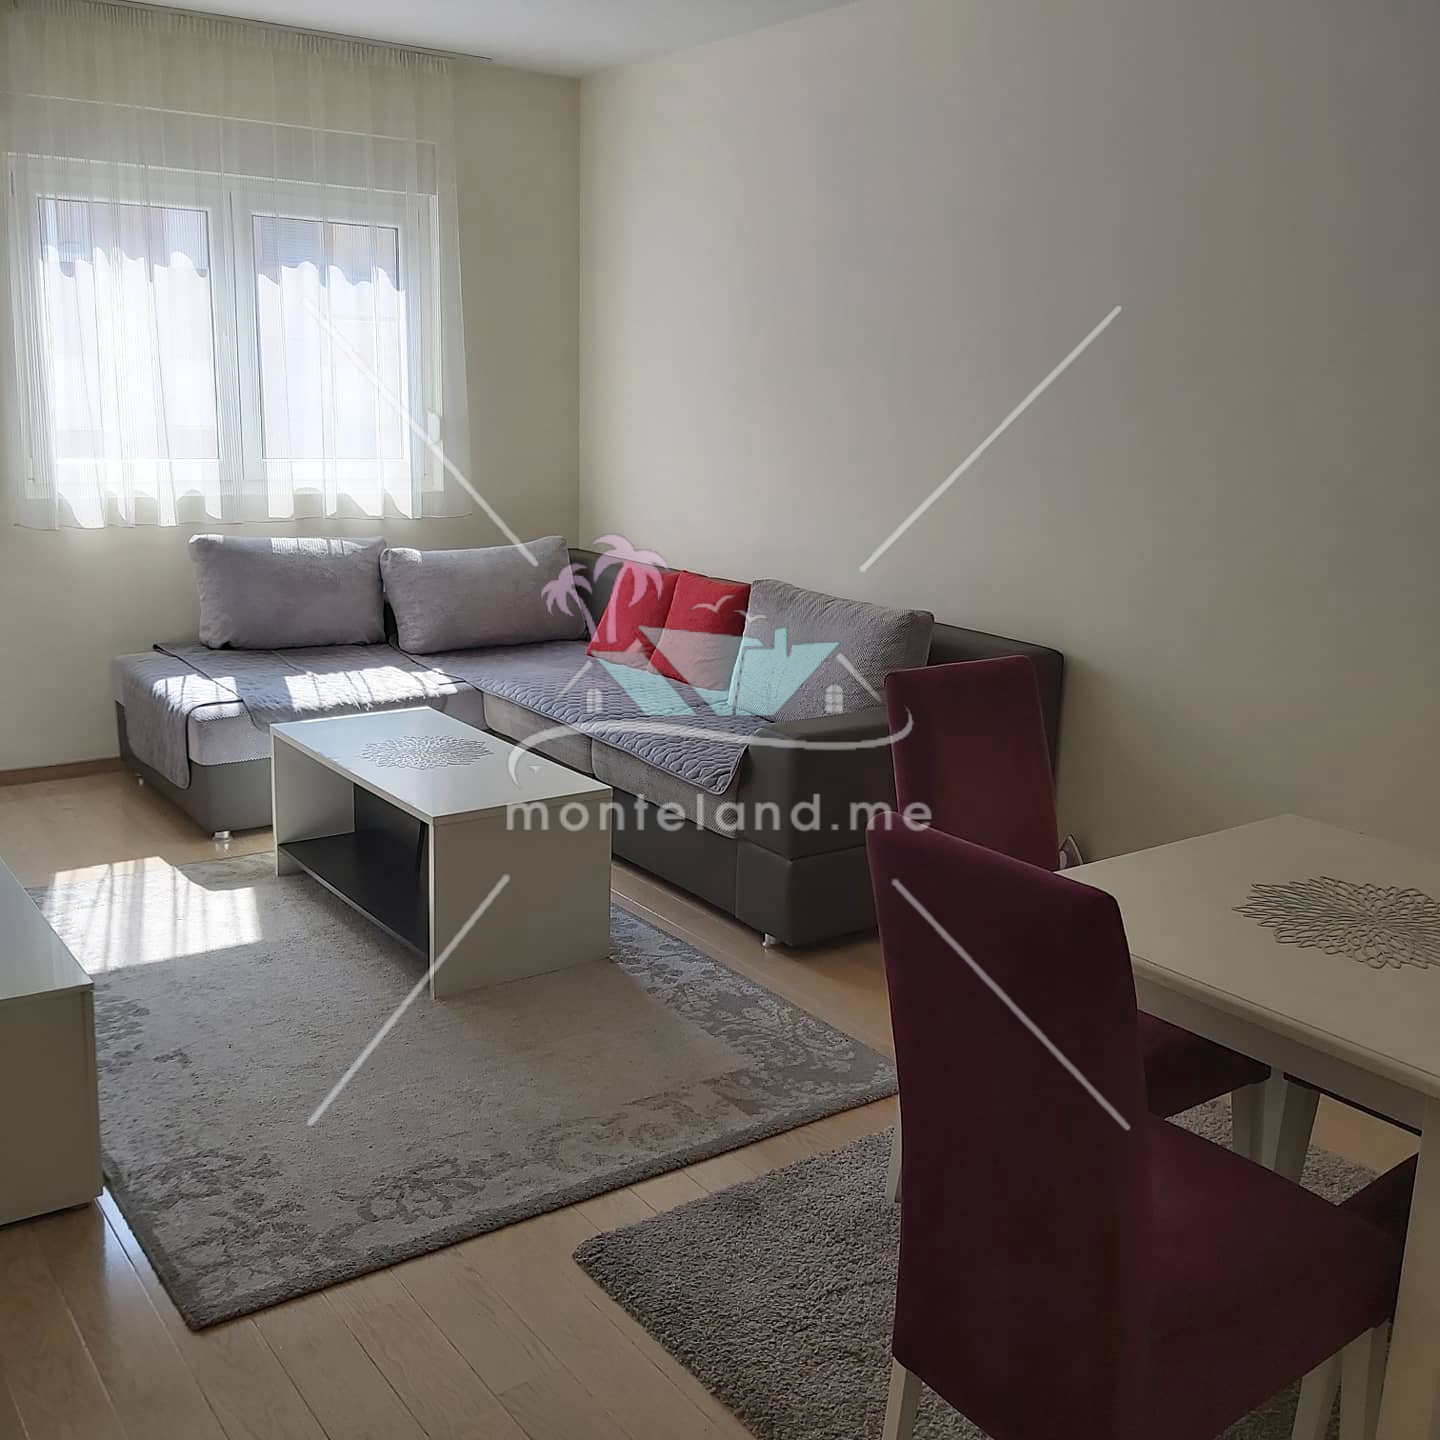 Apartment, offers vacation, PODGORICA, CITY KVART-DELTA, Montenegro, 45M, Price - 35€